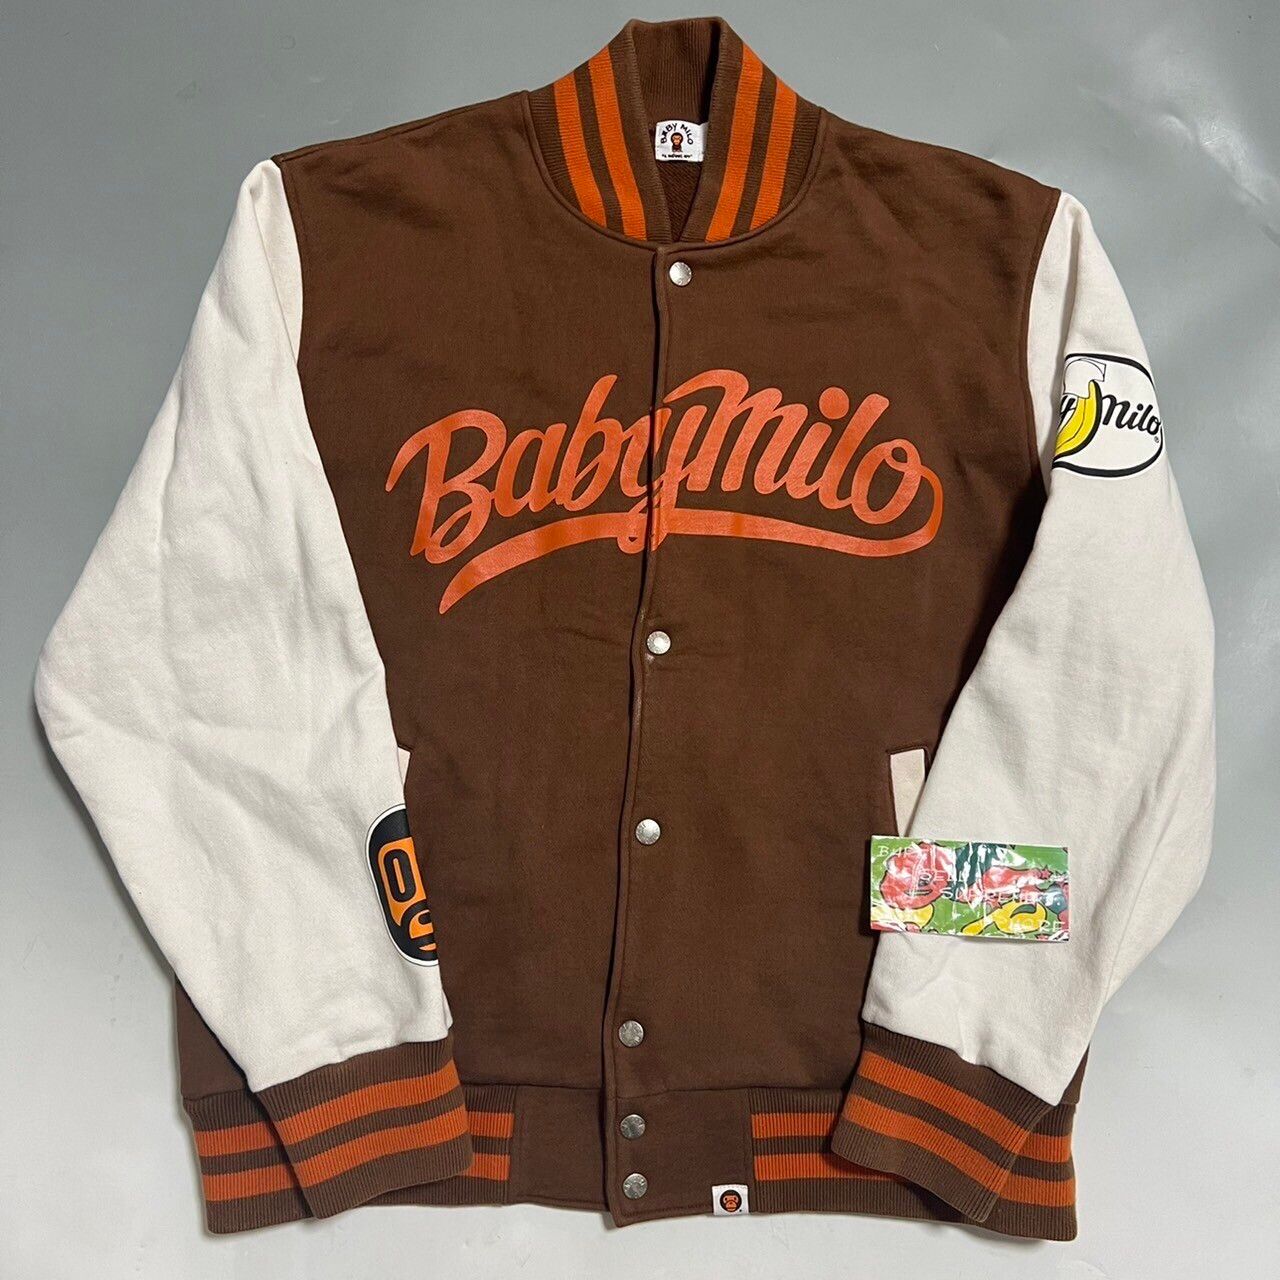 Bape BAPE Milo versity jacket brown/orange/white Size US M / EU 48-50 / 2 - 1 Preview